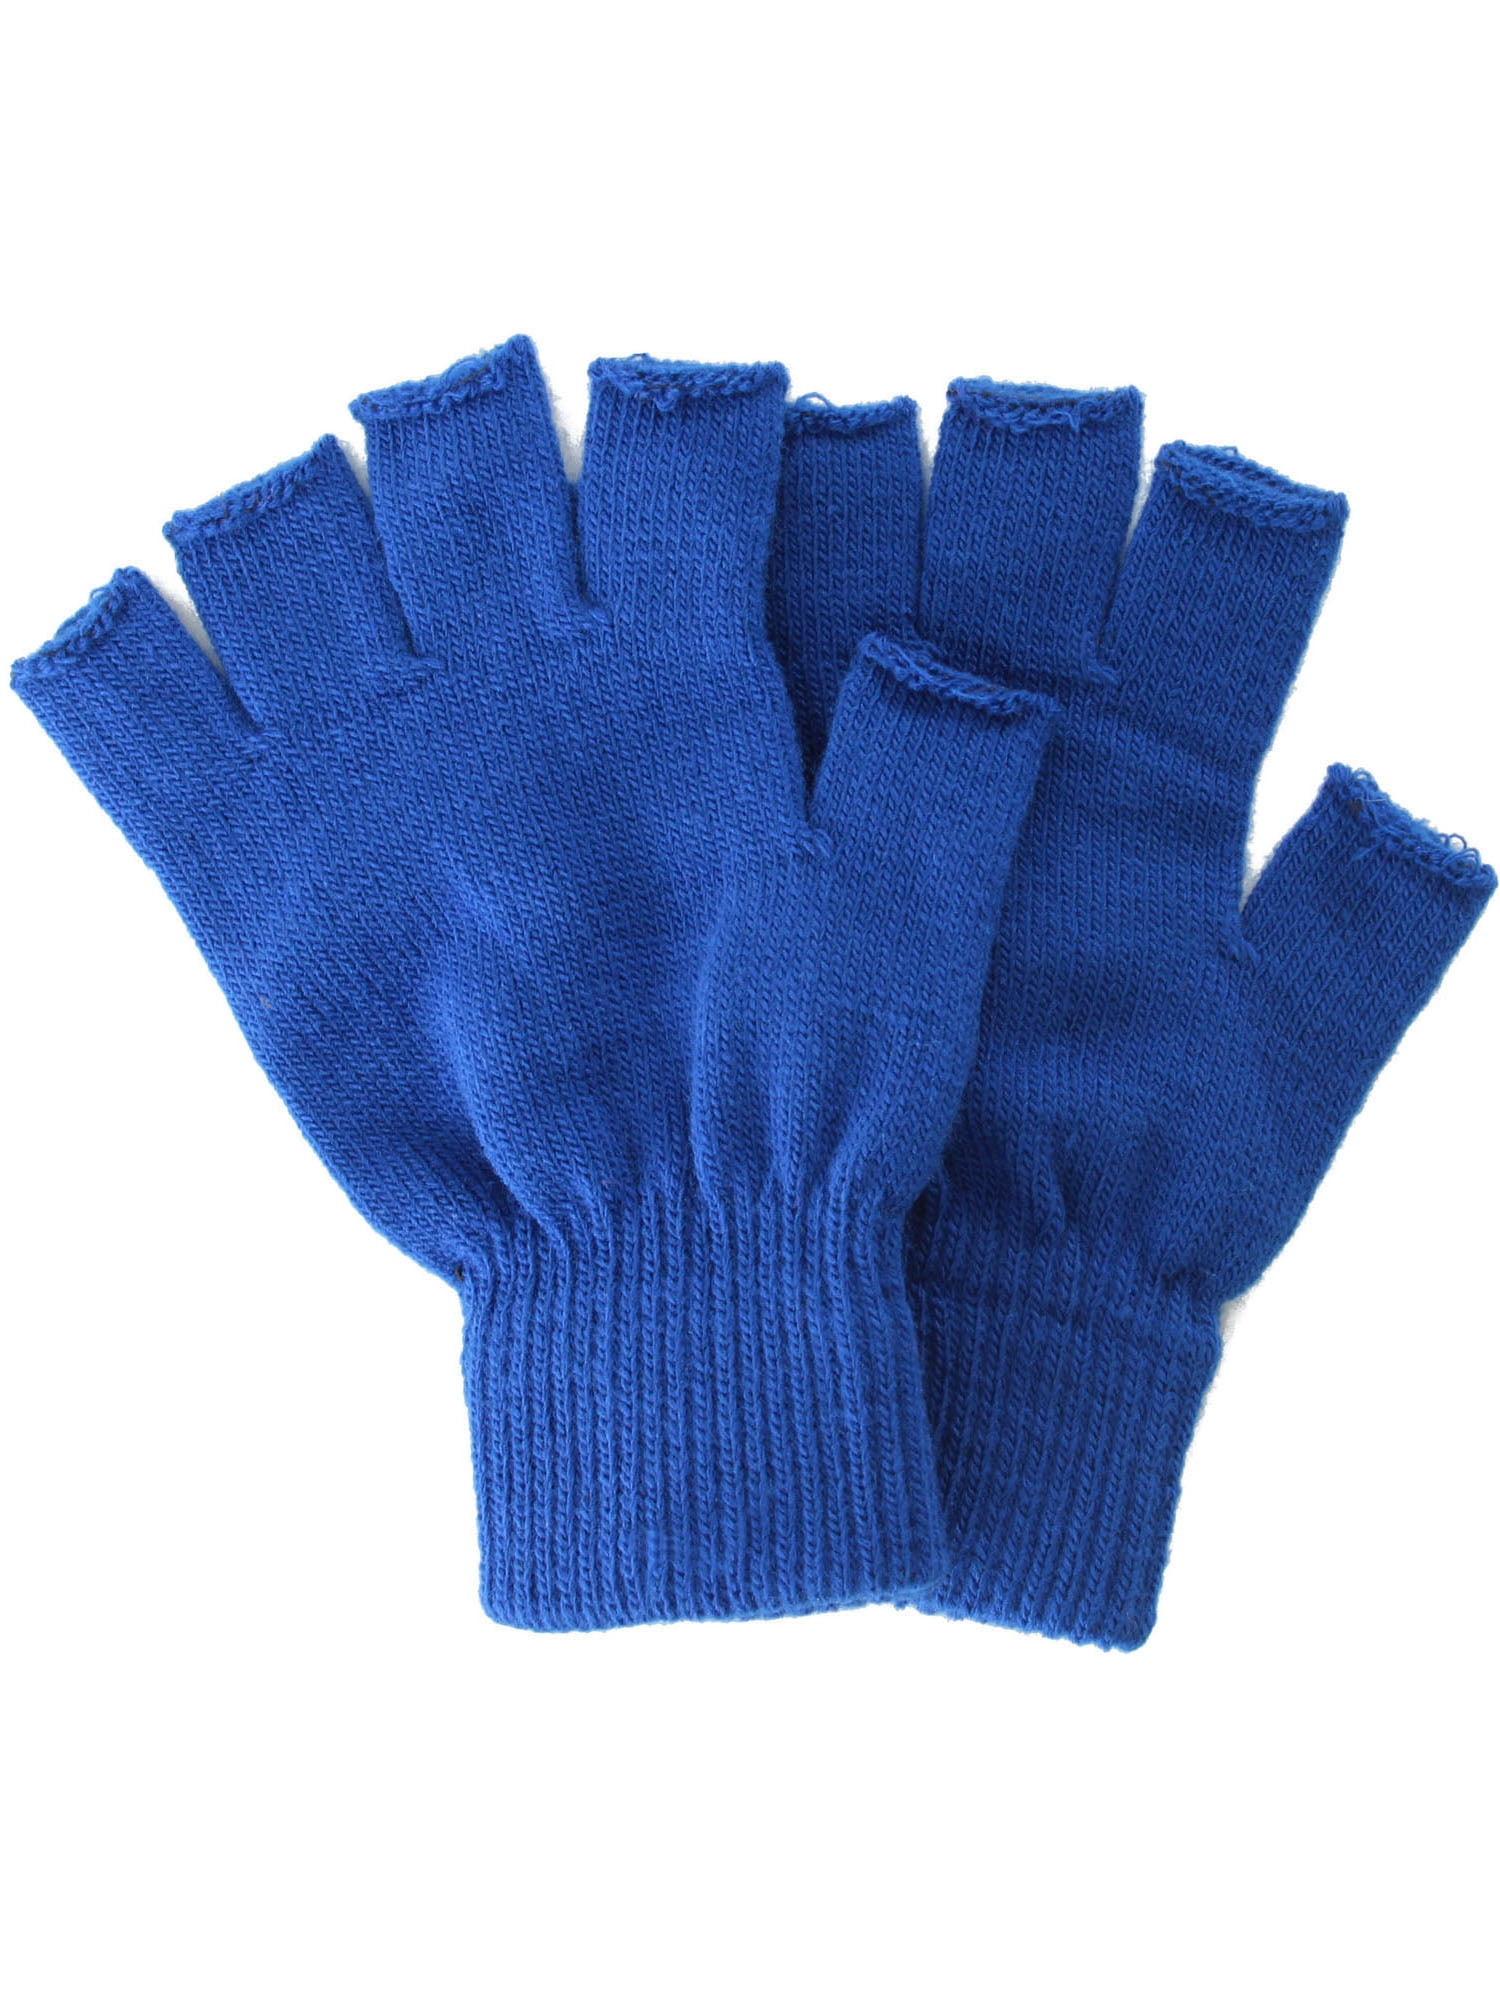 Black, Purple, Grey, Blue, 8-12 Years 4 Pairs Kids Winter Gloves Warm Fleece Finger Gloves Soft Kids Winter Gloves for Kids Boys Girls Winter Outdoors Activities 